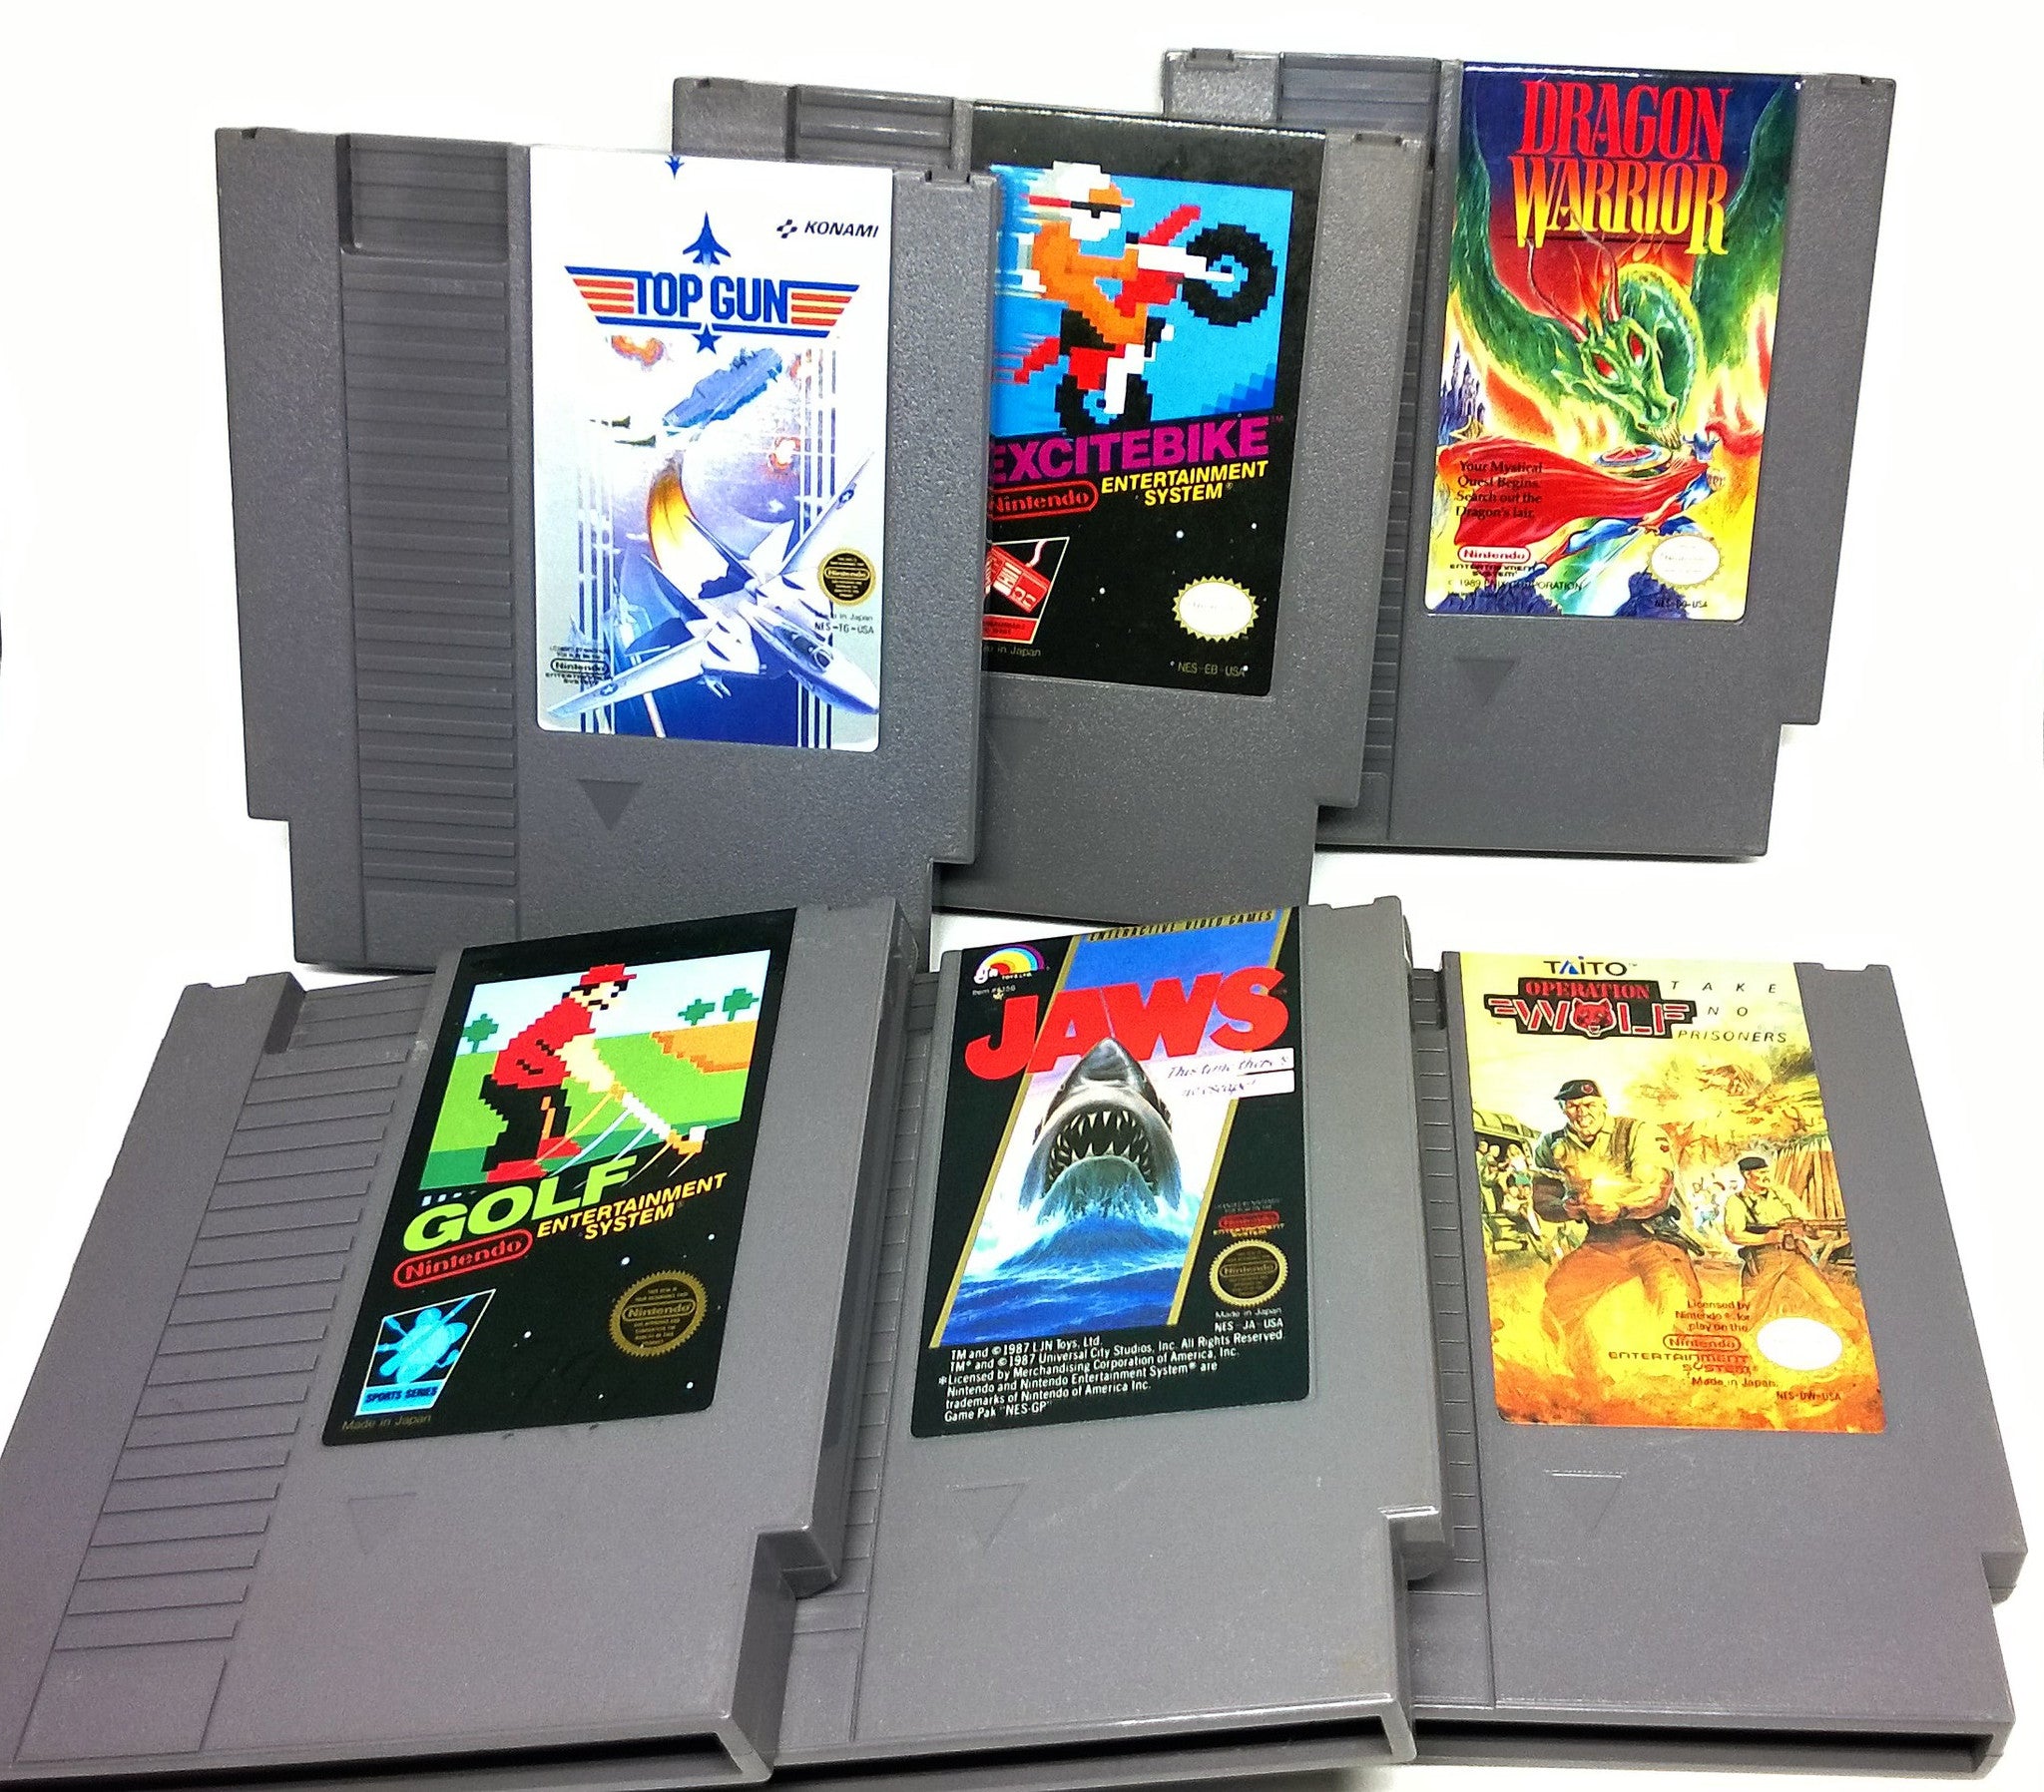 New NES games